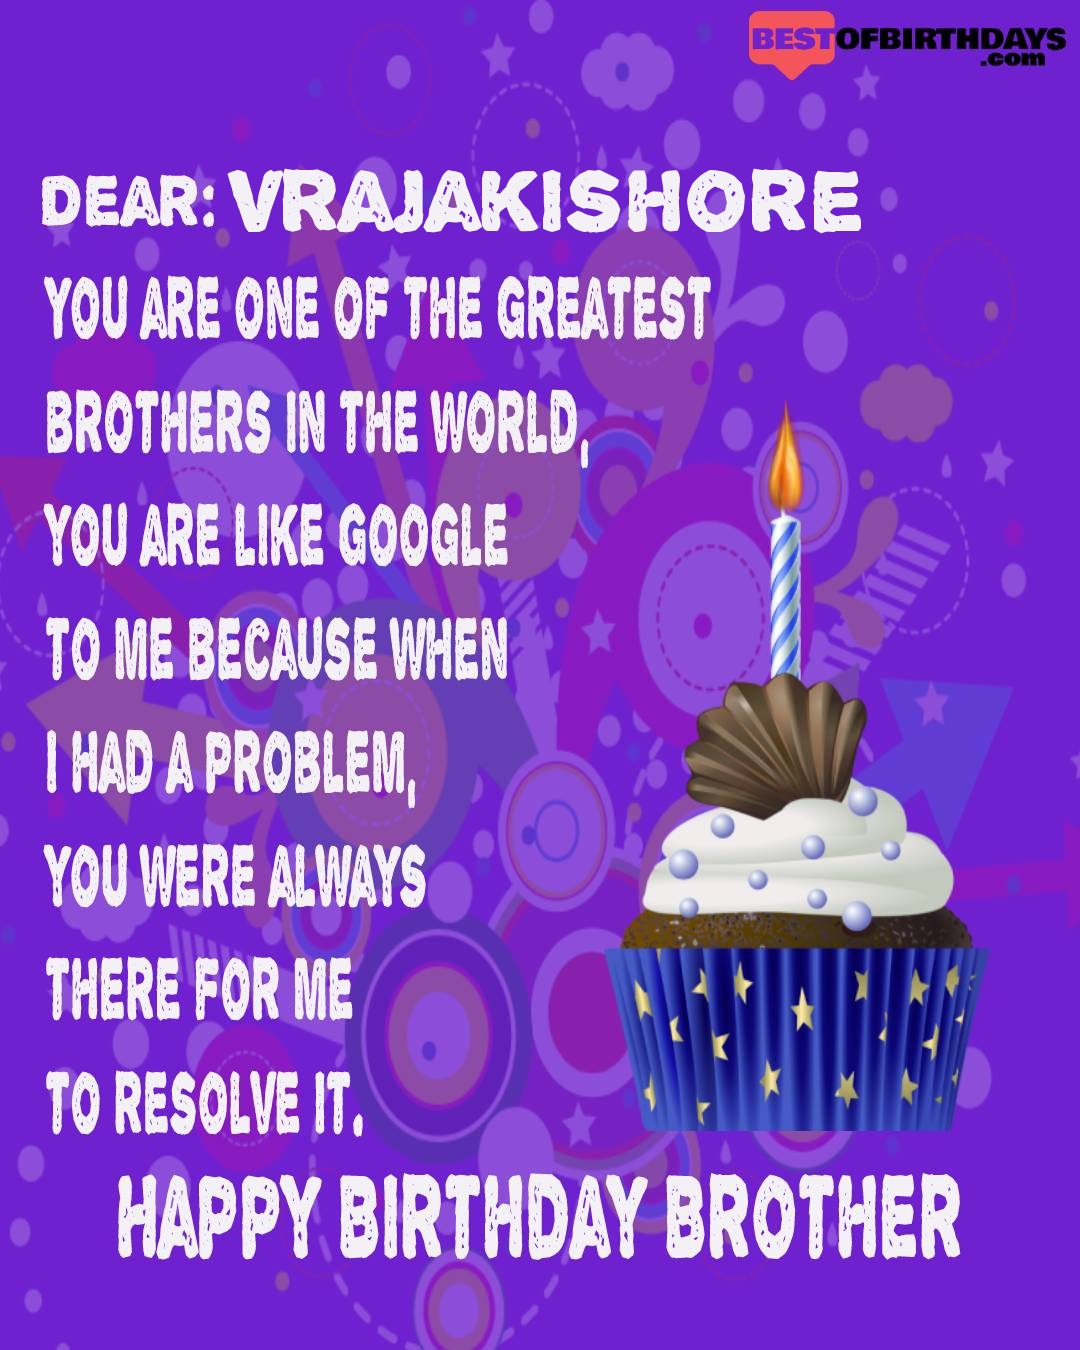 Happy birthday vrajakishore bhai brother bro